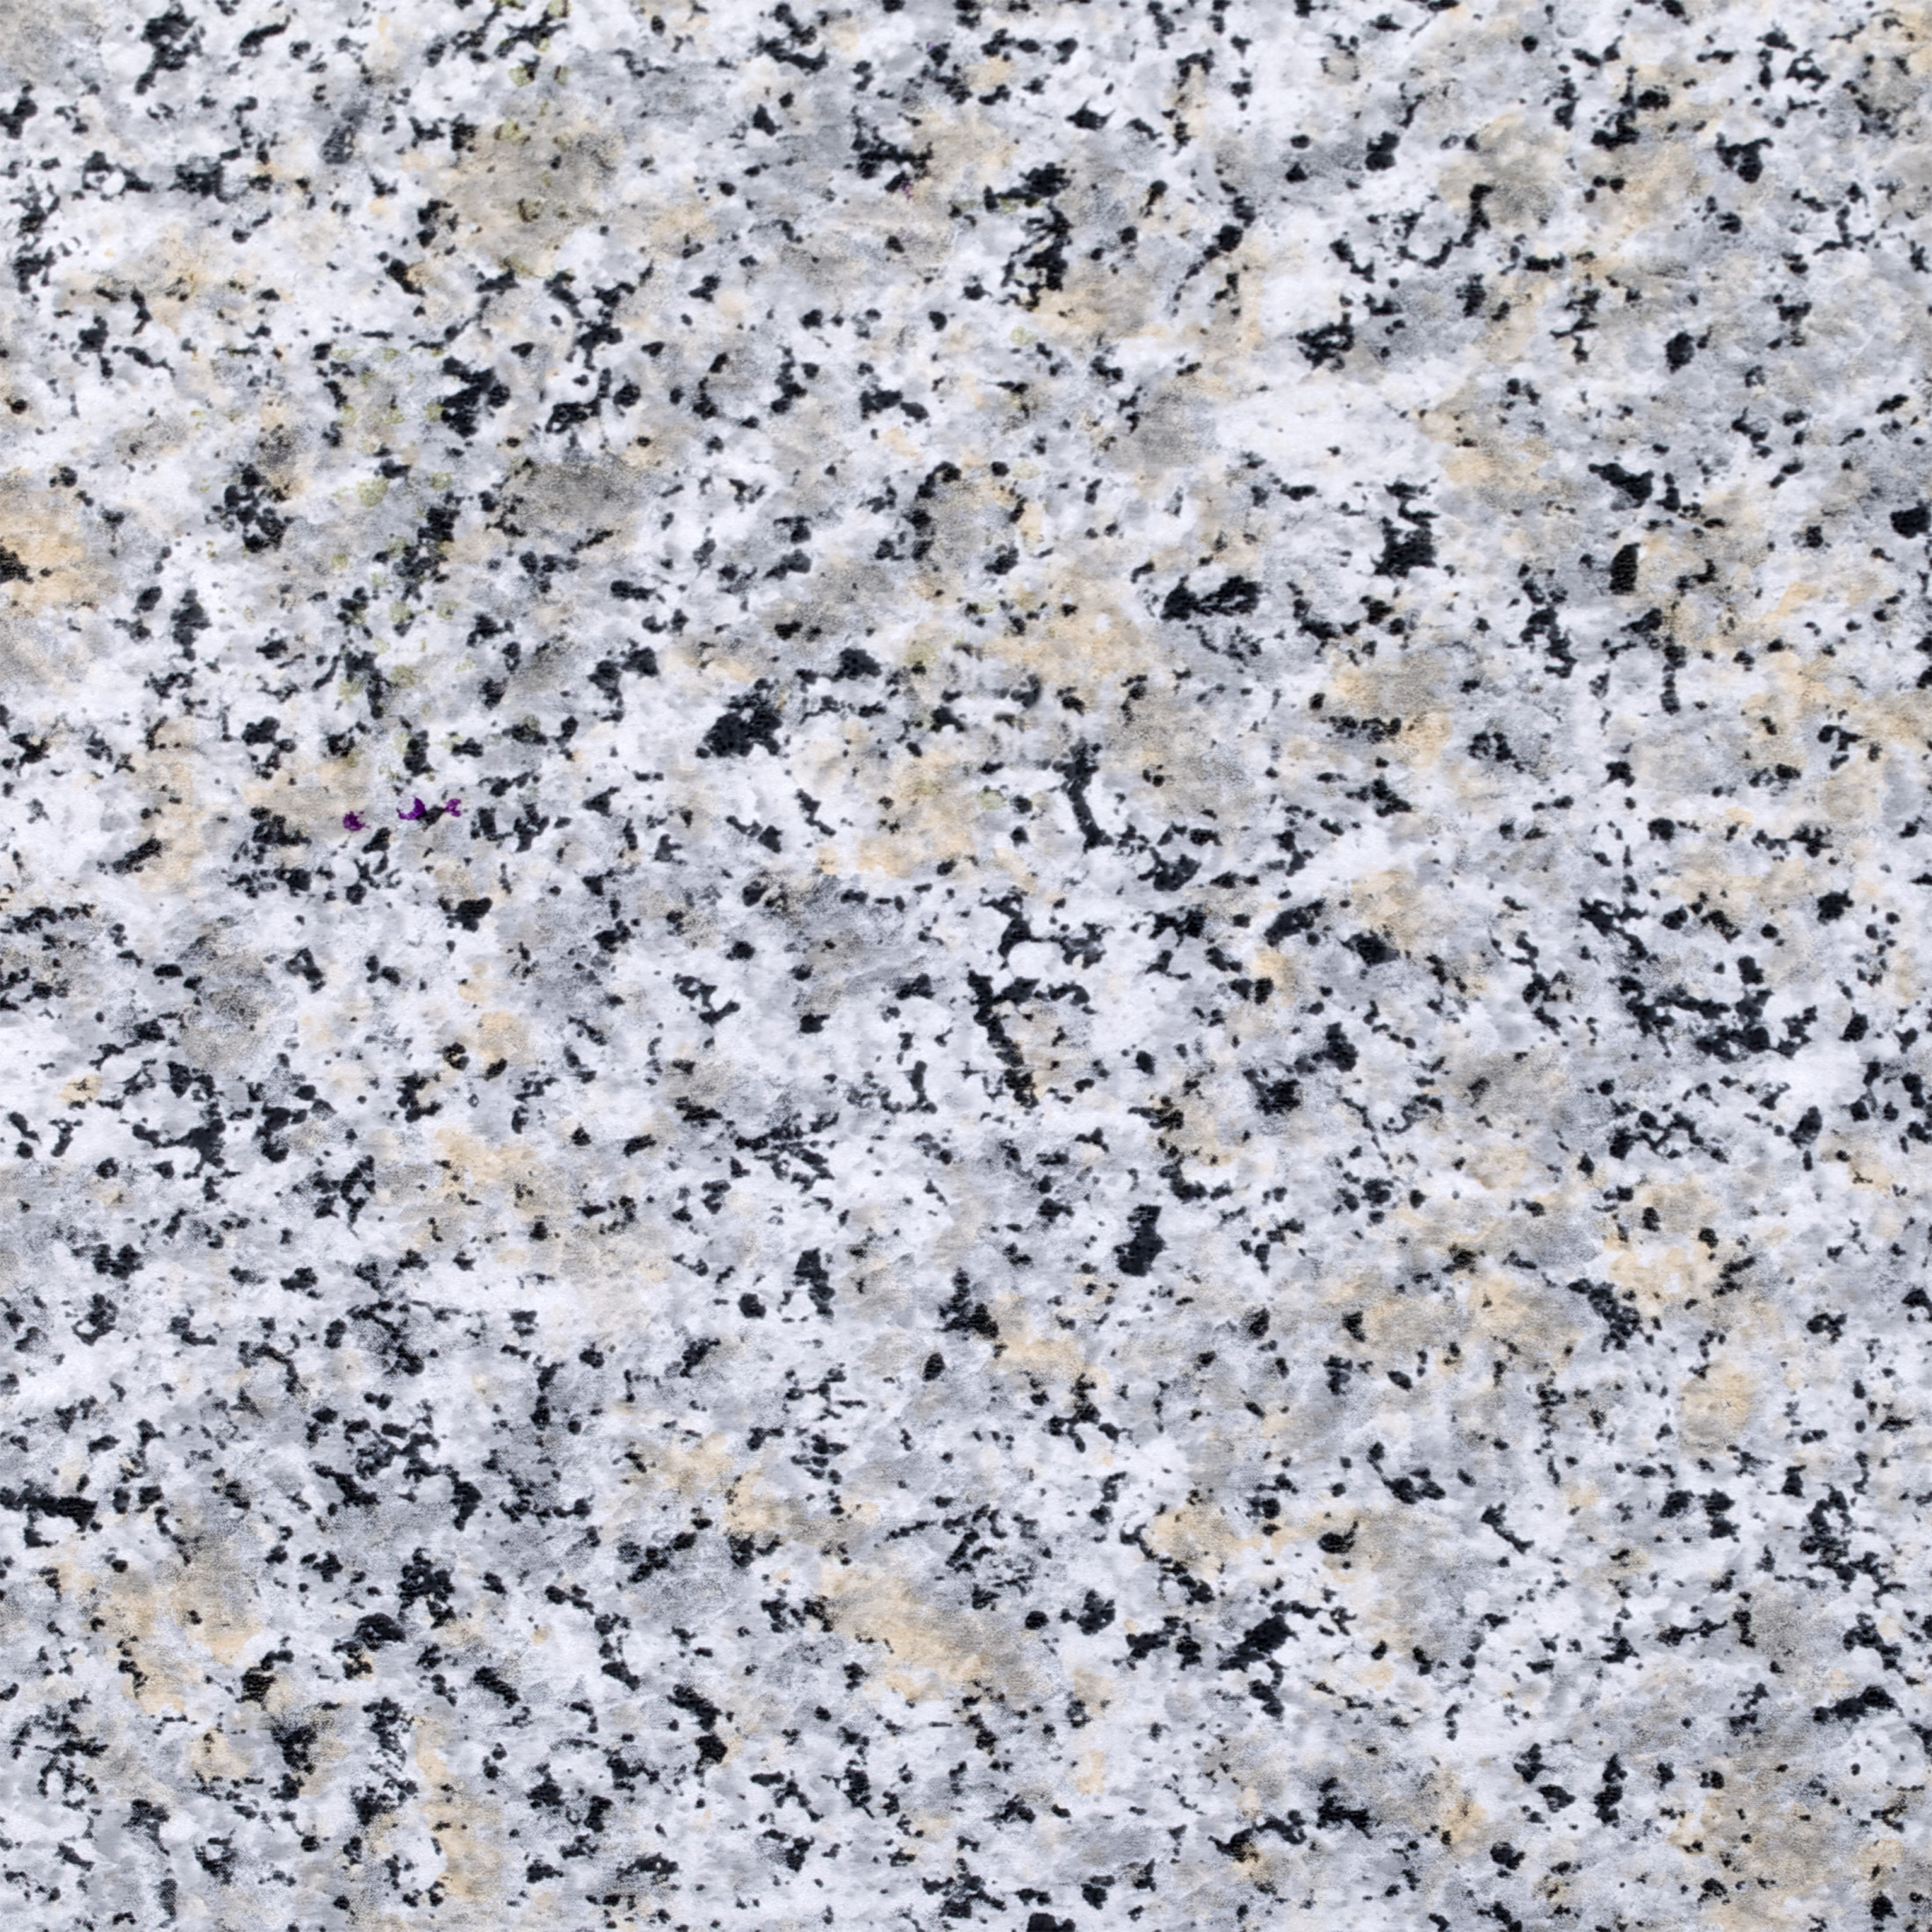 EasyLiner Smooth Top Shelf Liner, Grey Granite, 12 in. x 30 ft. Roll - image 5 of 11